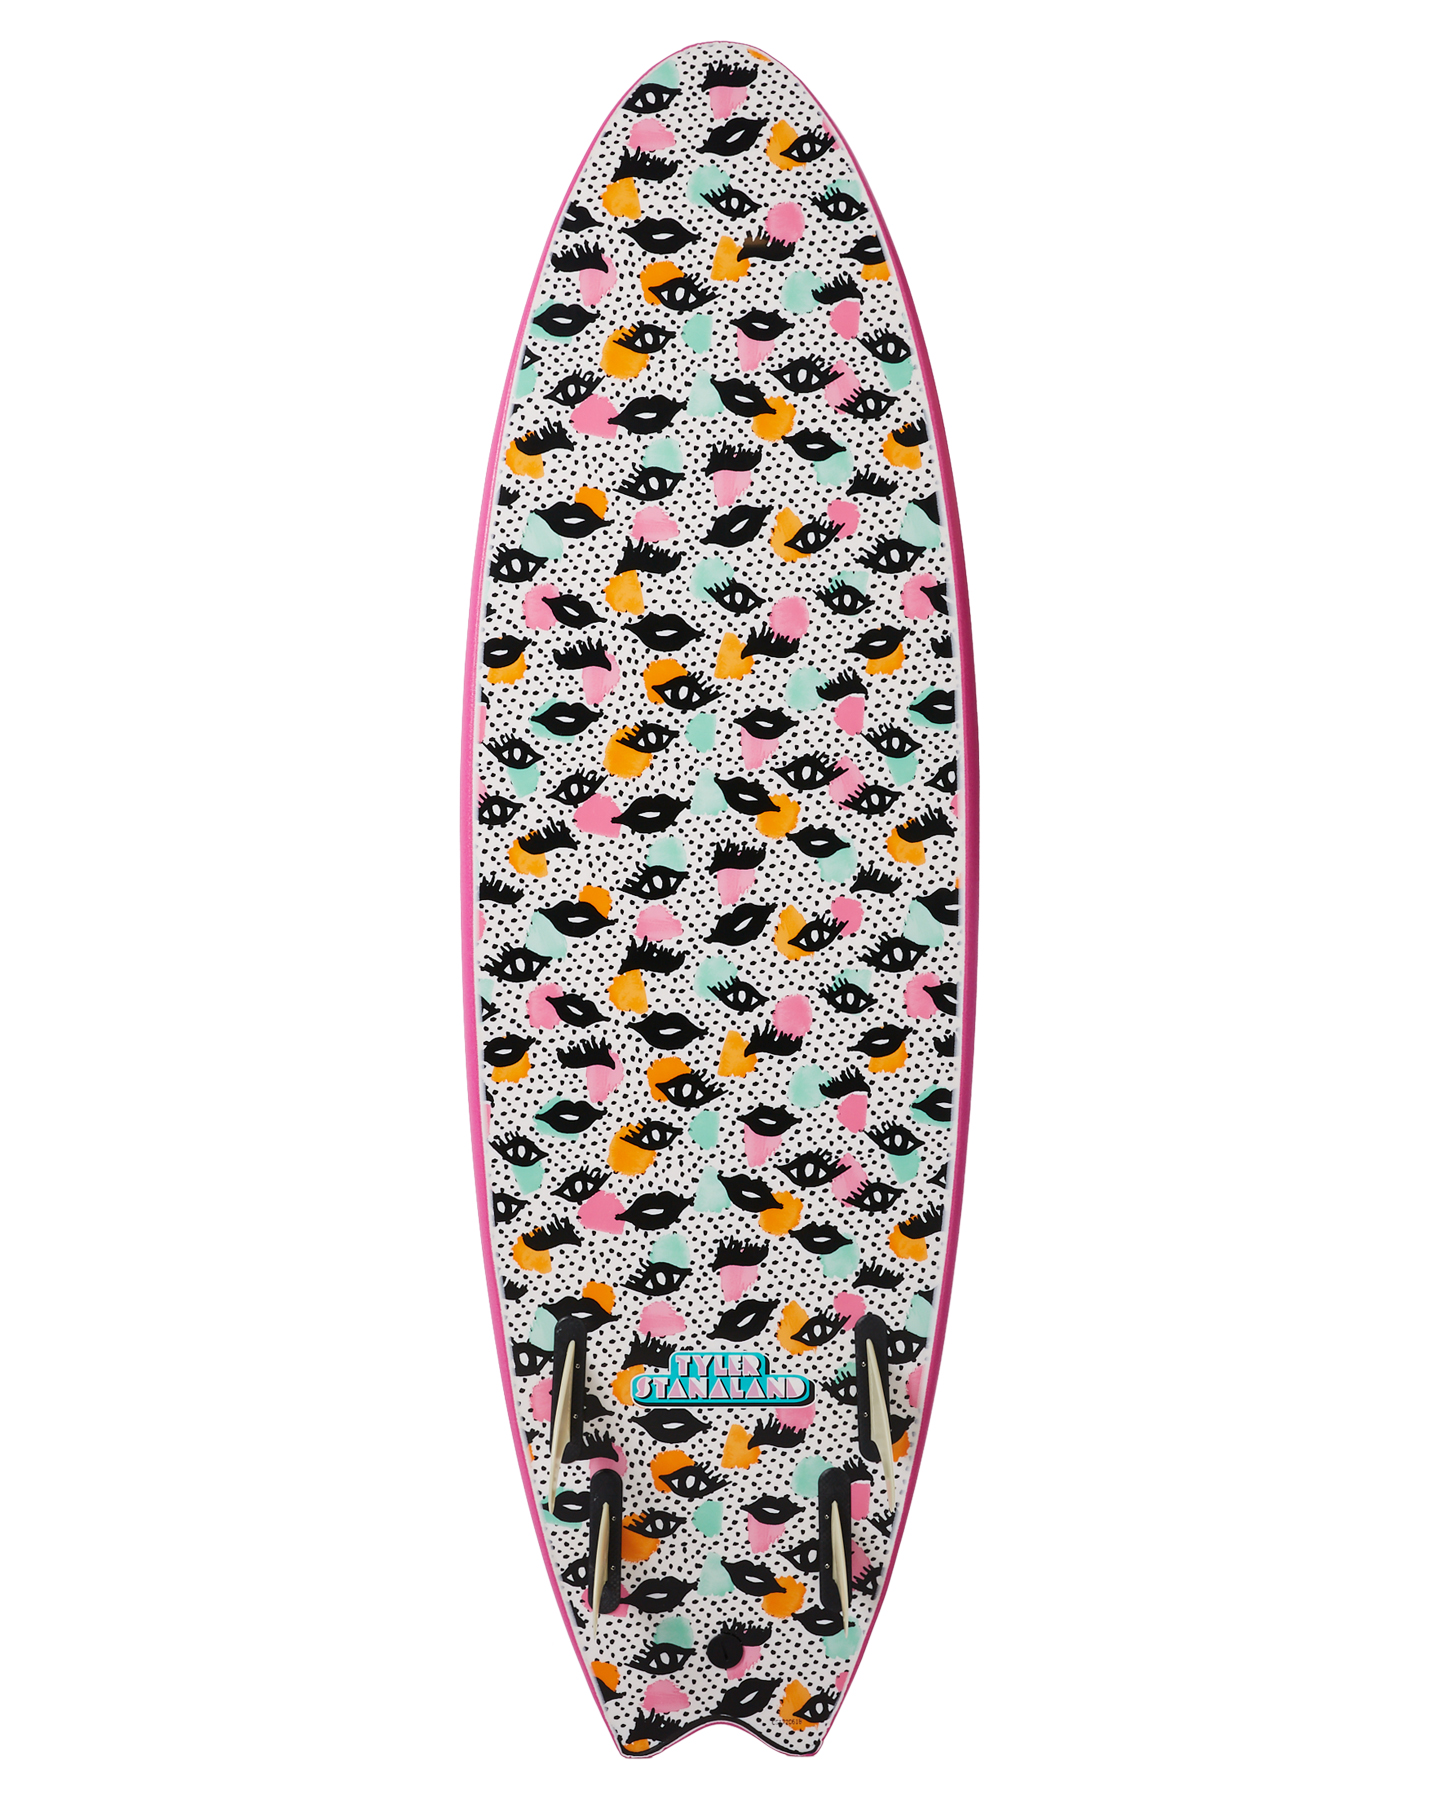 Catch Surf Tyler Stanaland 6Ft Skipper Pro Quad Softboard - Hot Pink